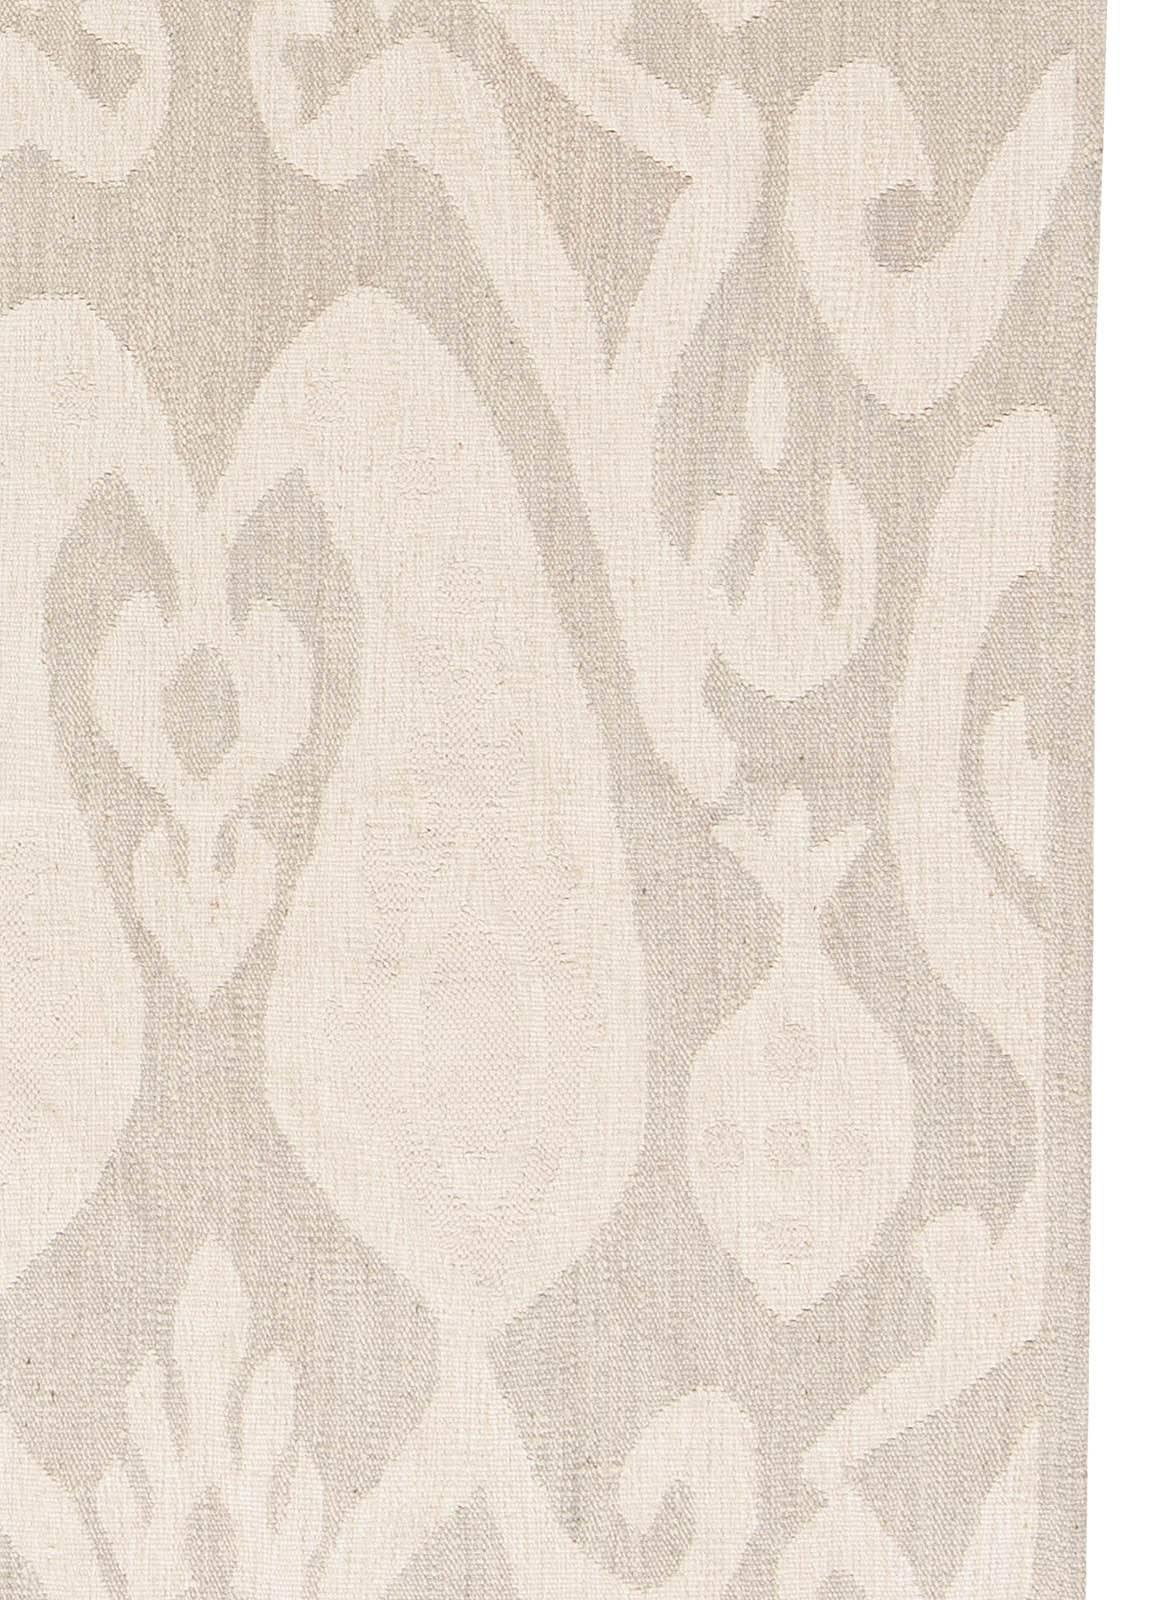 Contemporary Light Grey Handmade Wool Kilim Rug by Doris Leslie Blau For Sale 1